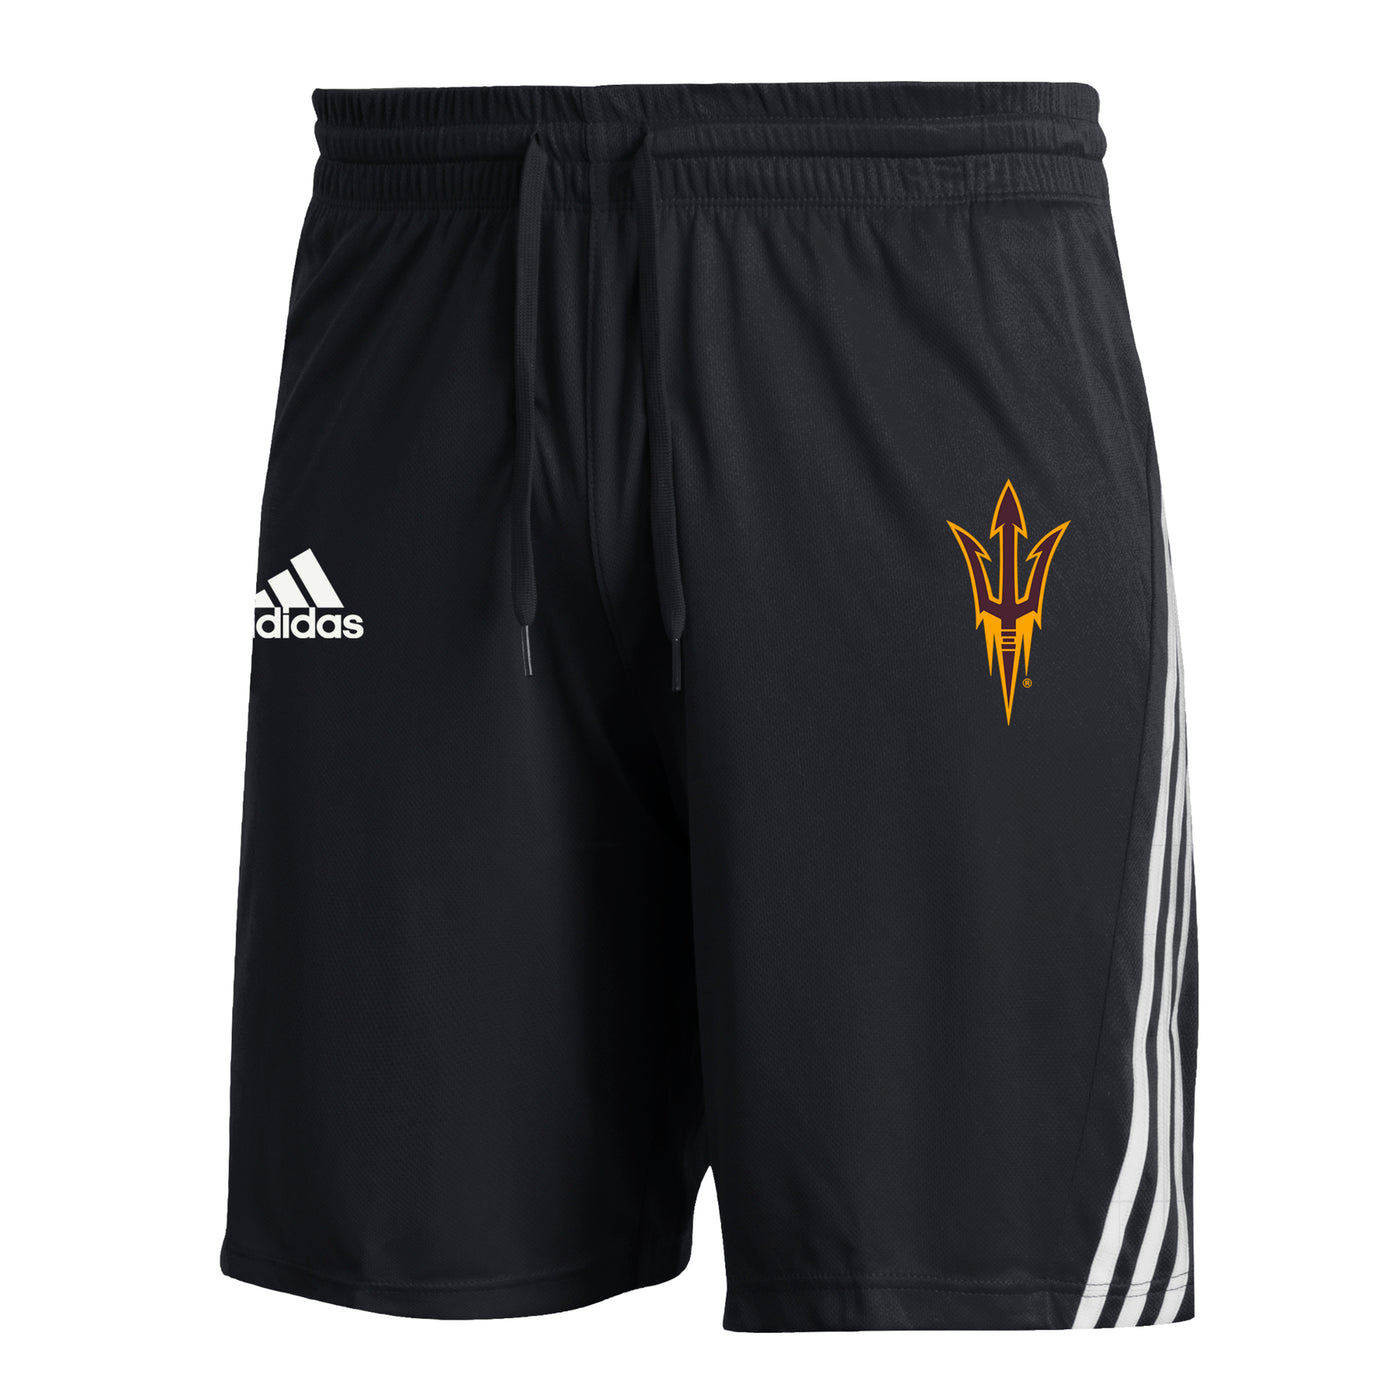 ASU black drawstring shorts with pitchfork and 3 white stripes onthe left leg